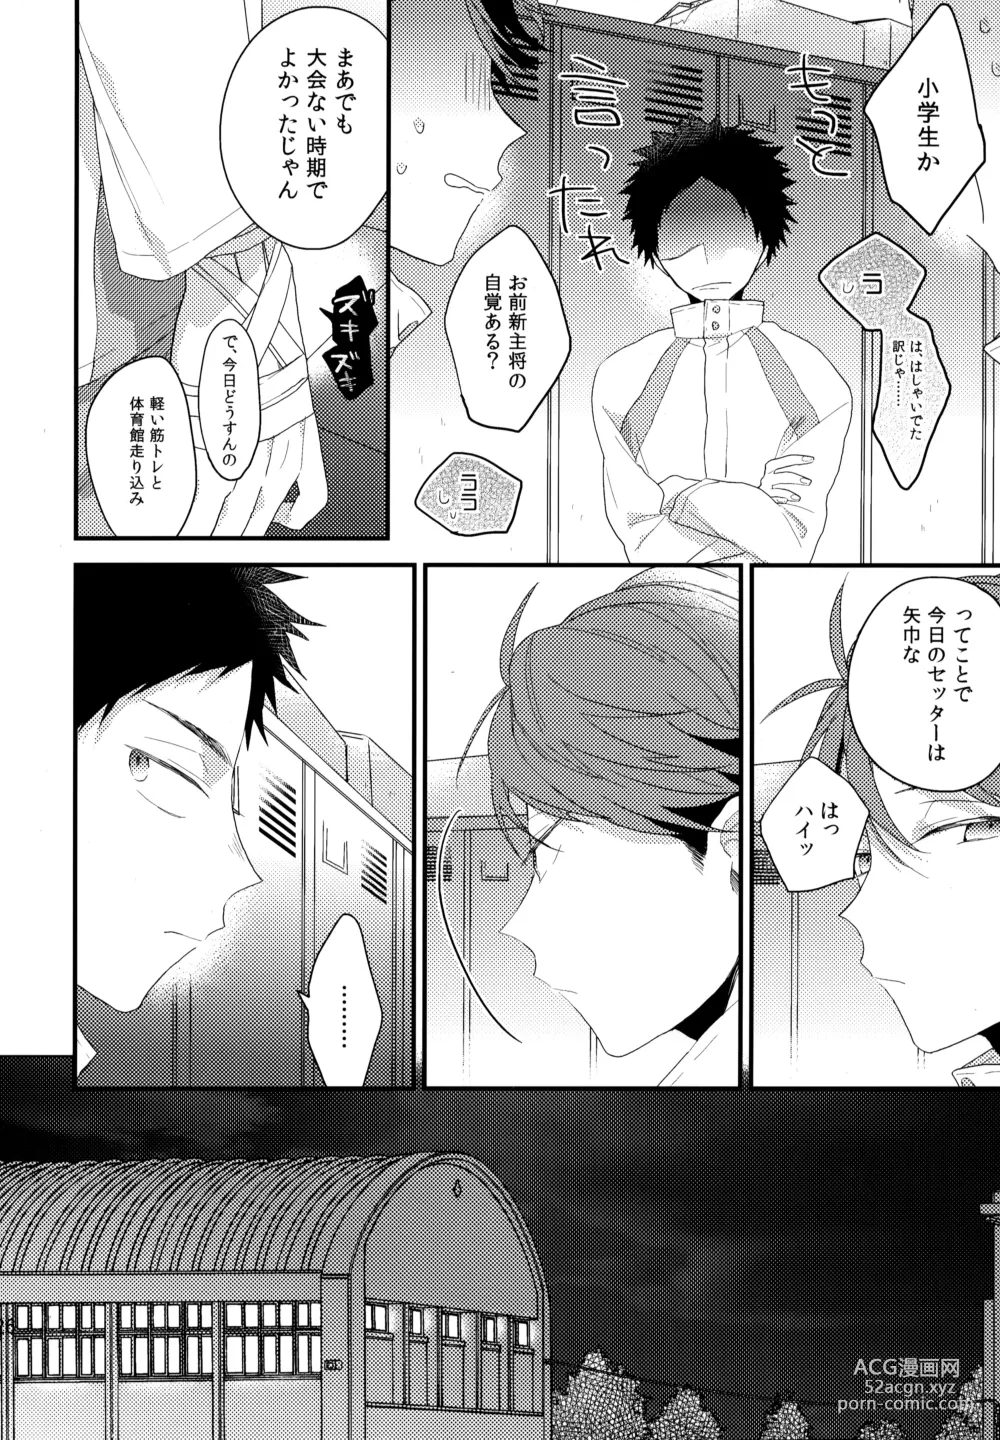 Page 225 of doujinshi Uchidome OiIwa Sairoku 2